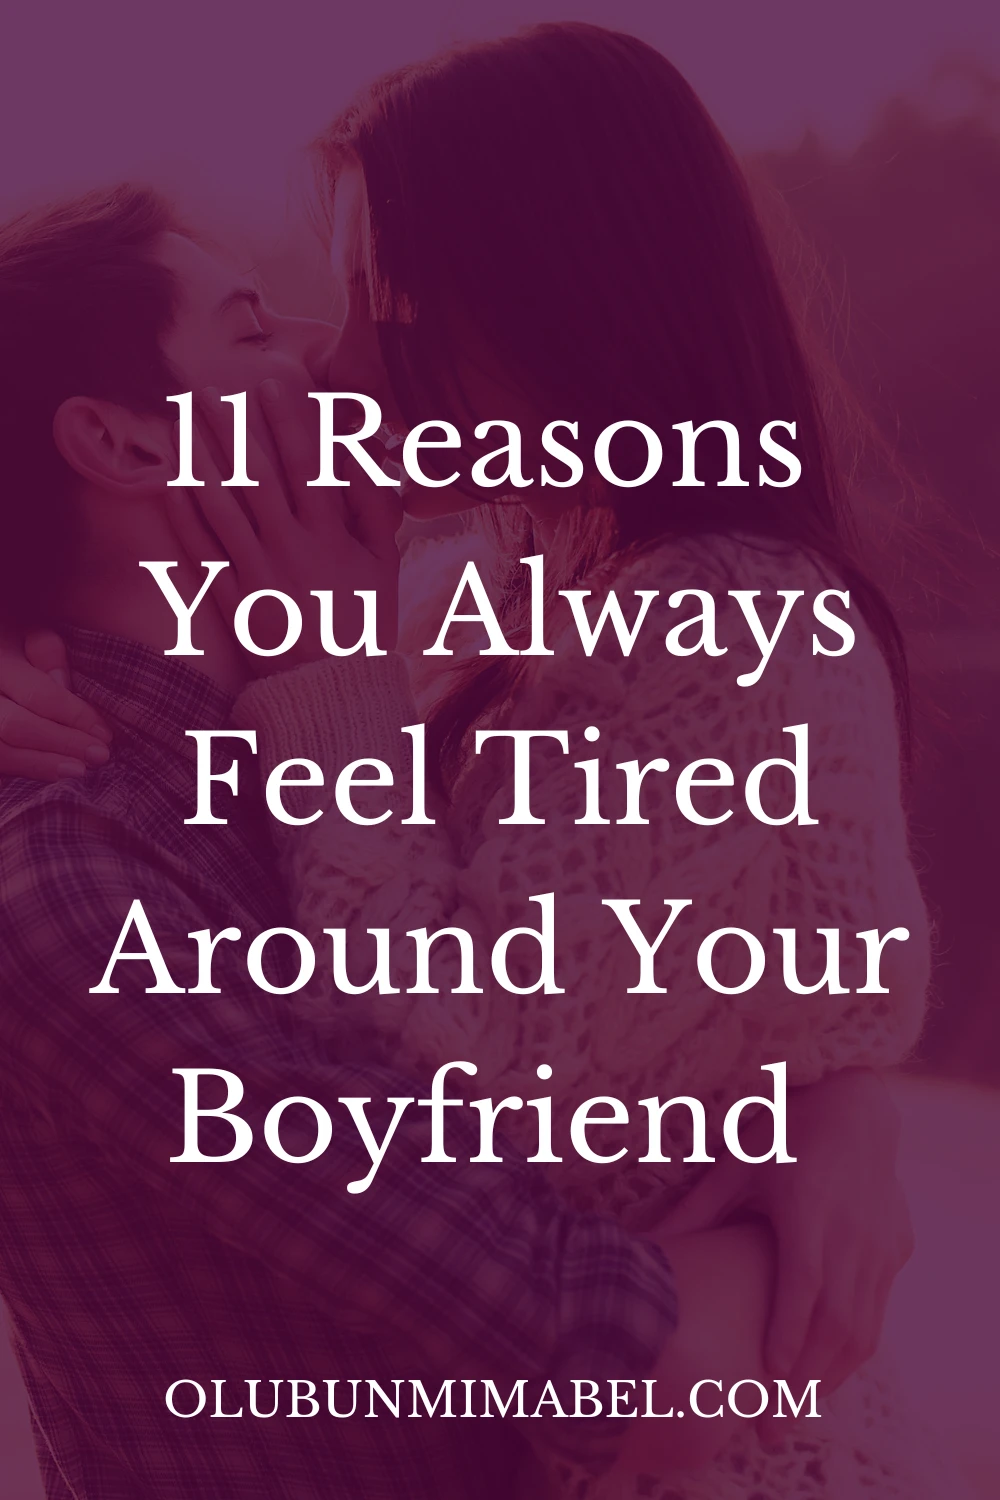 Why Am I So Tired Around My Boyfriend?